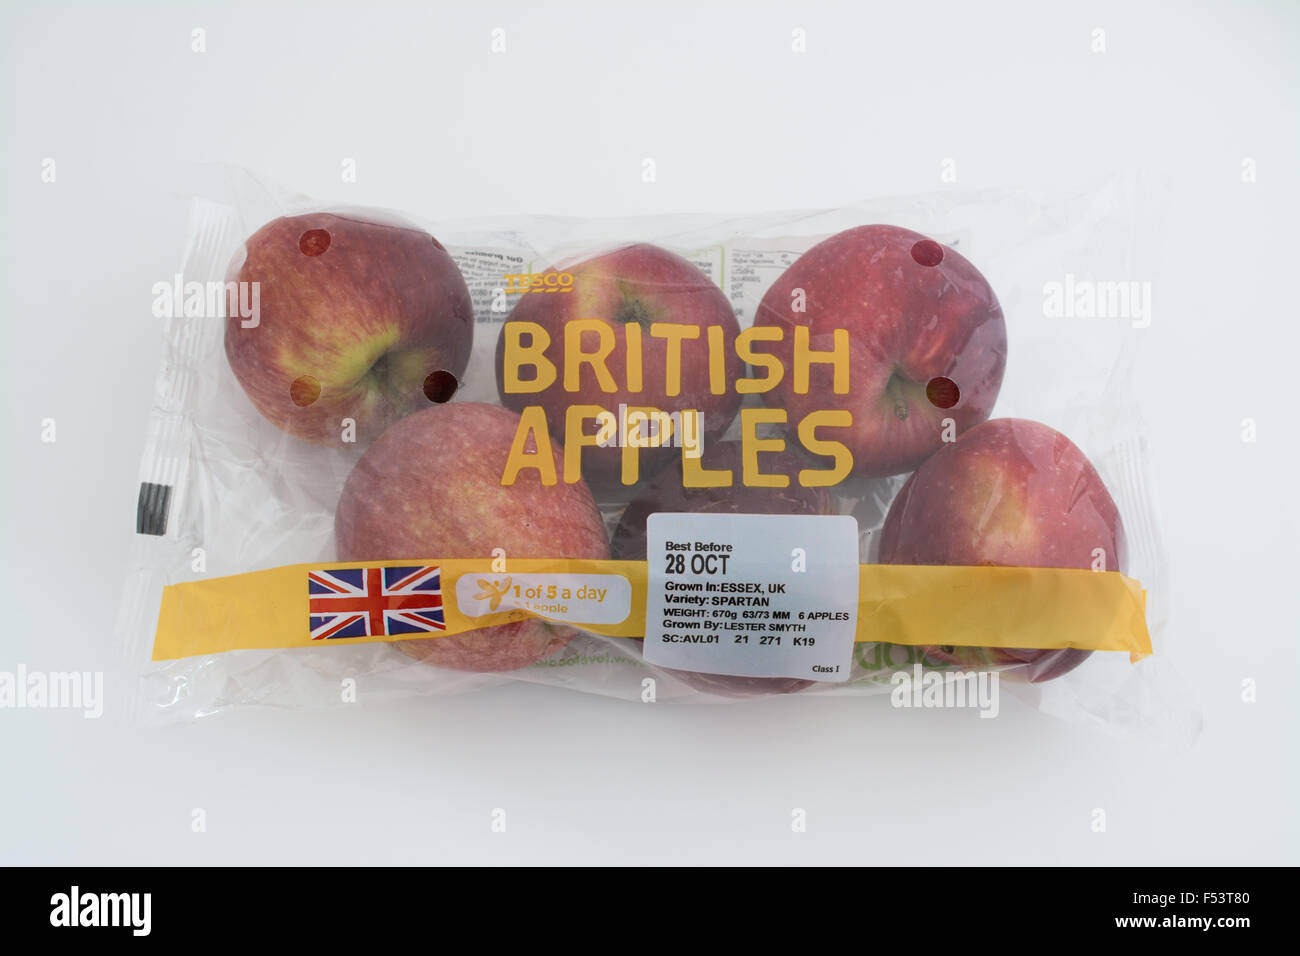 Bag of British Apples Stock Photo